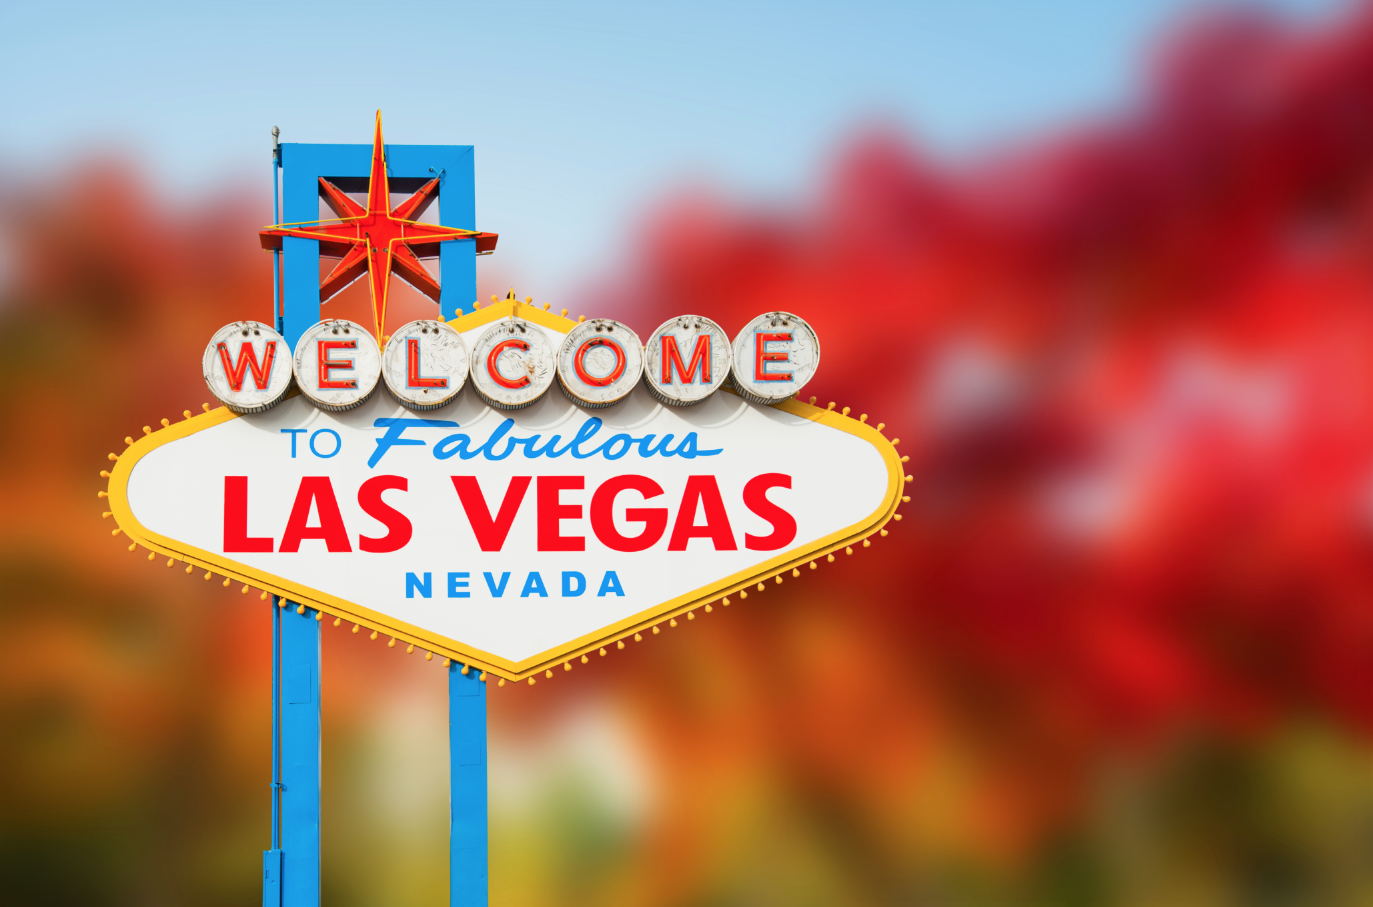 Essentials for visiting new Las Vegas: More than gambling